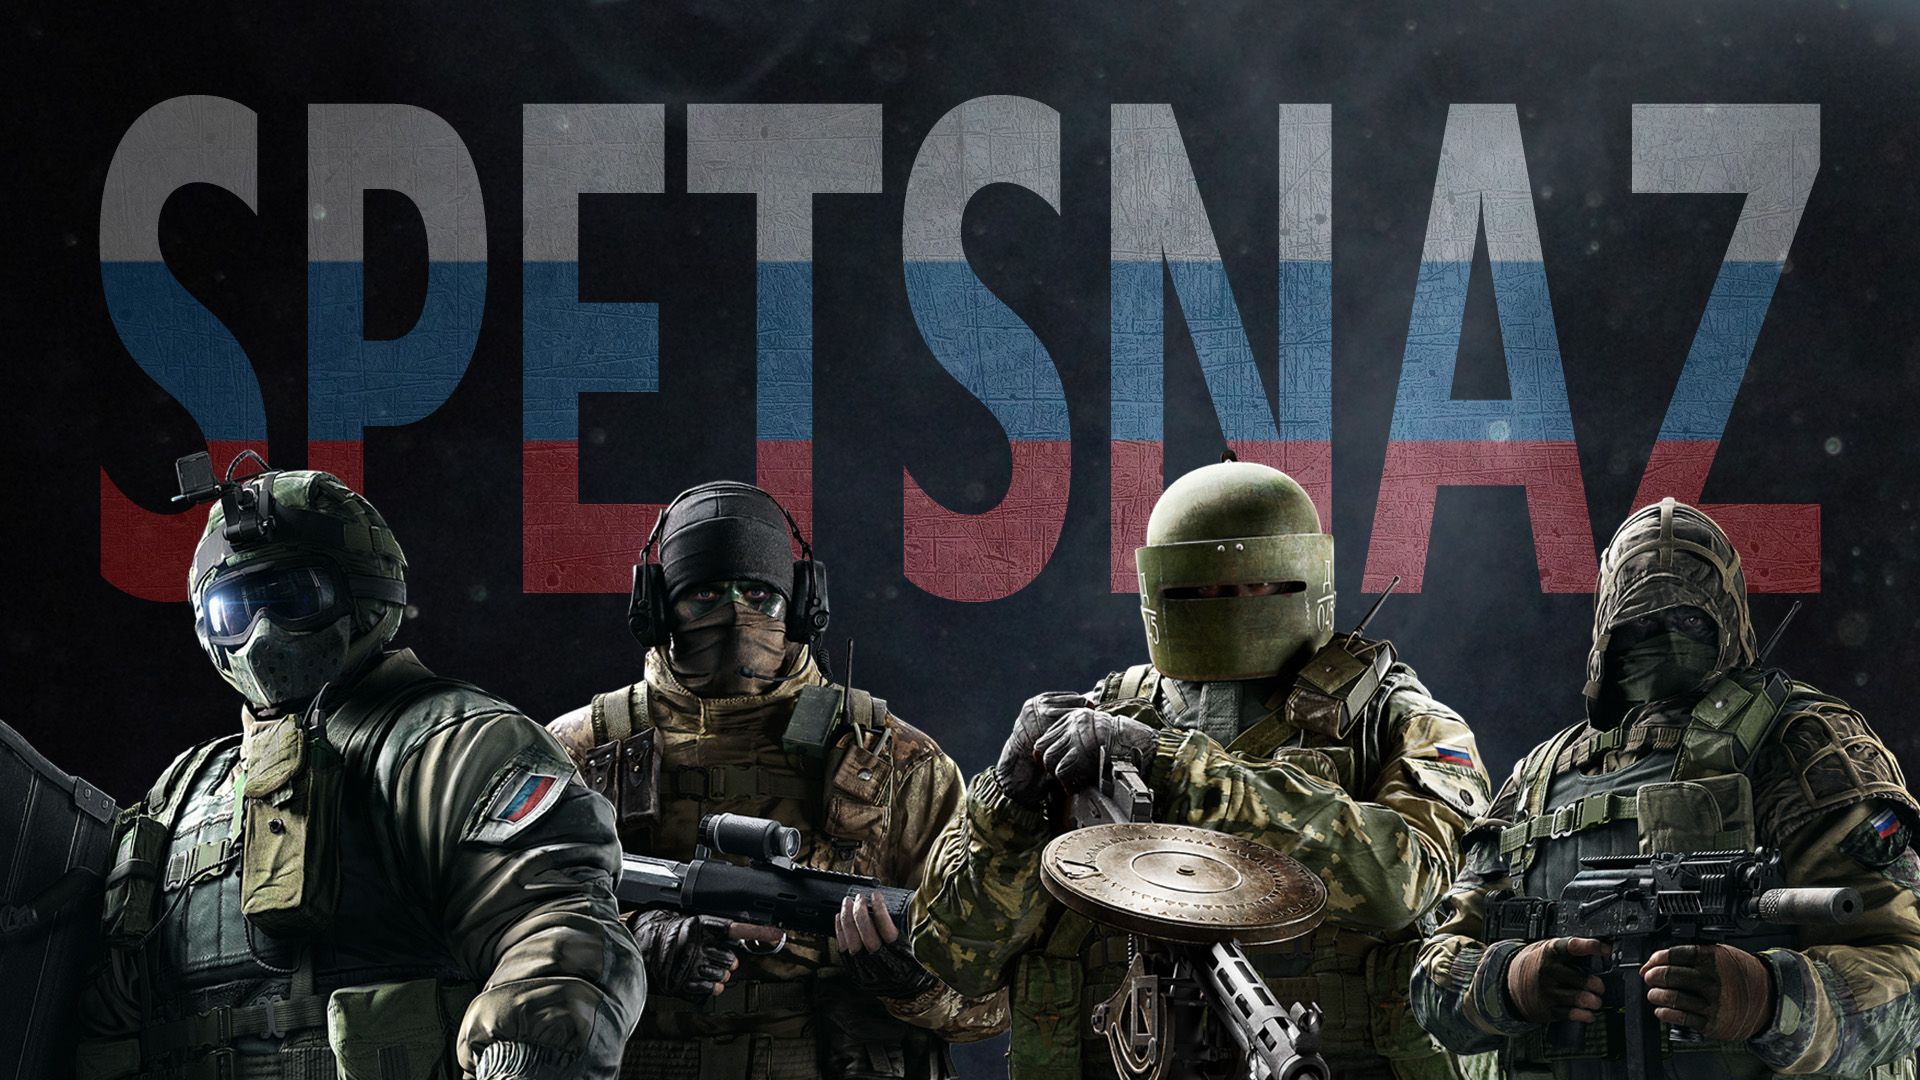 spetsnaz logo wallpaper